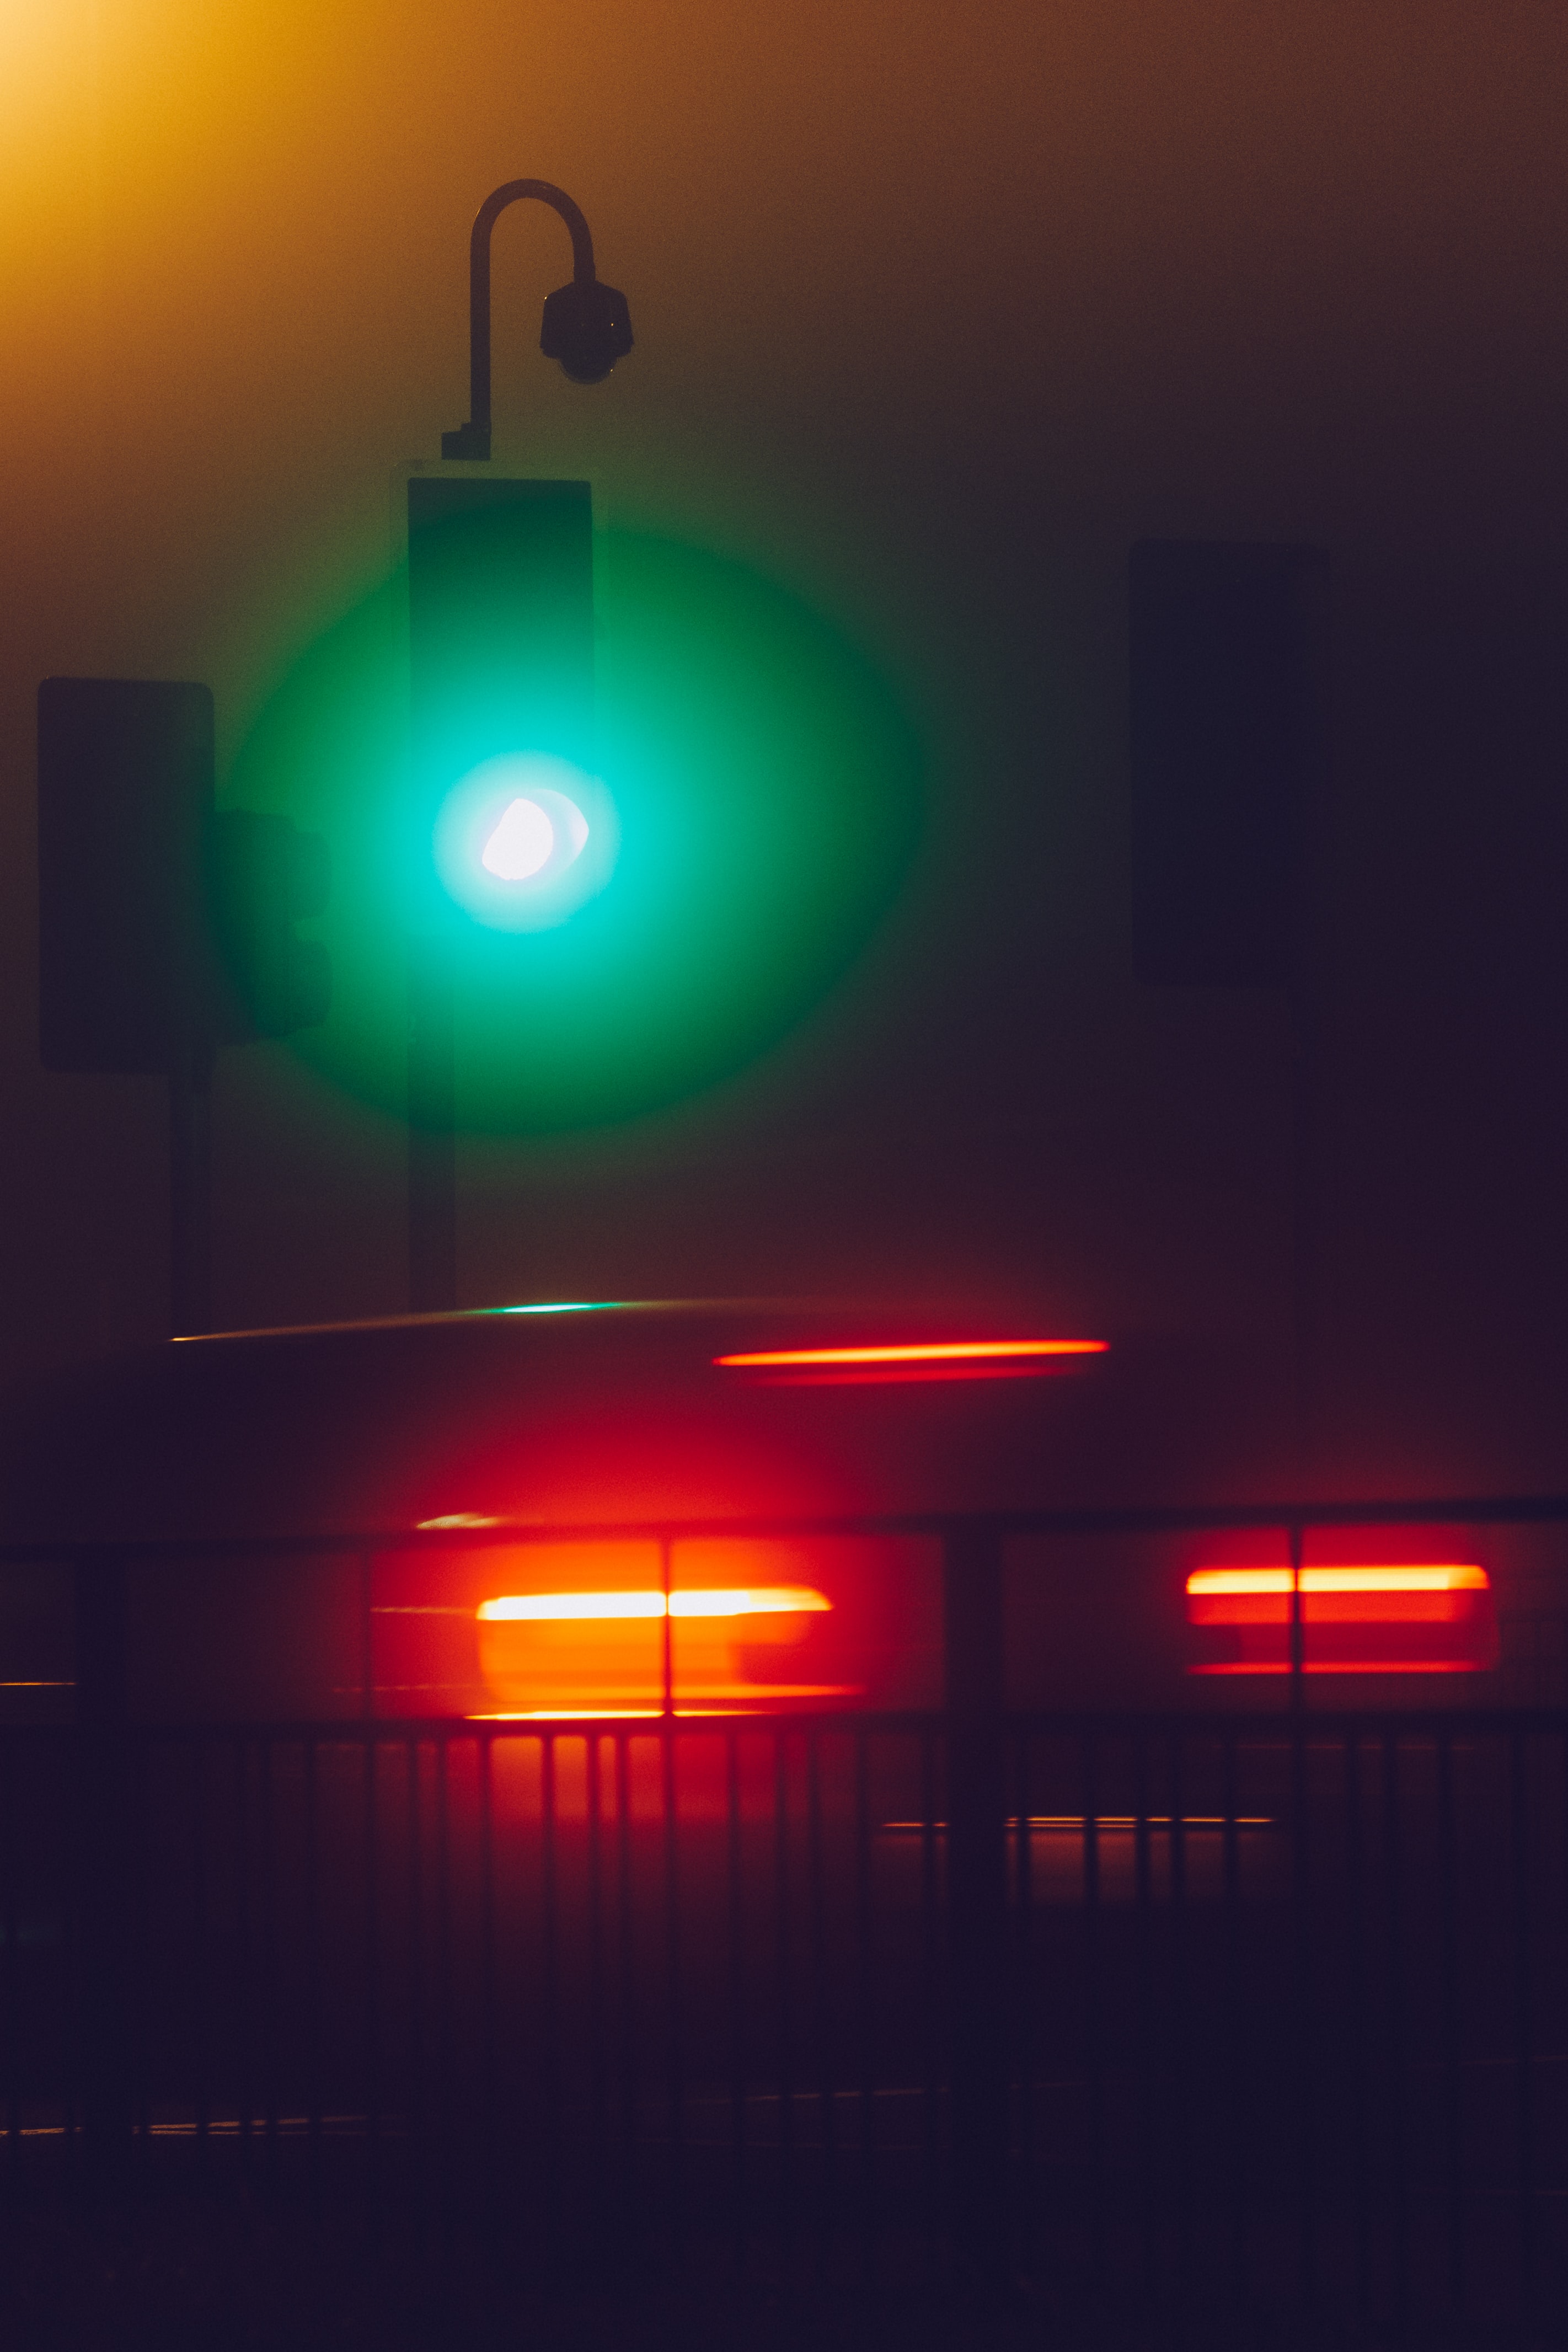 Traffic Light Widescreen image